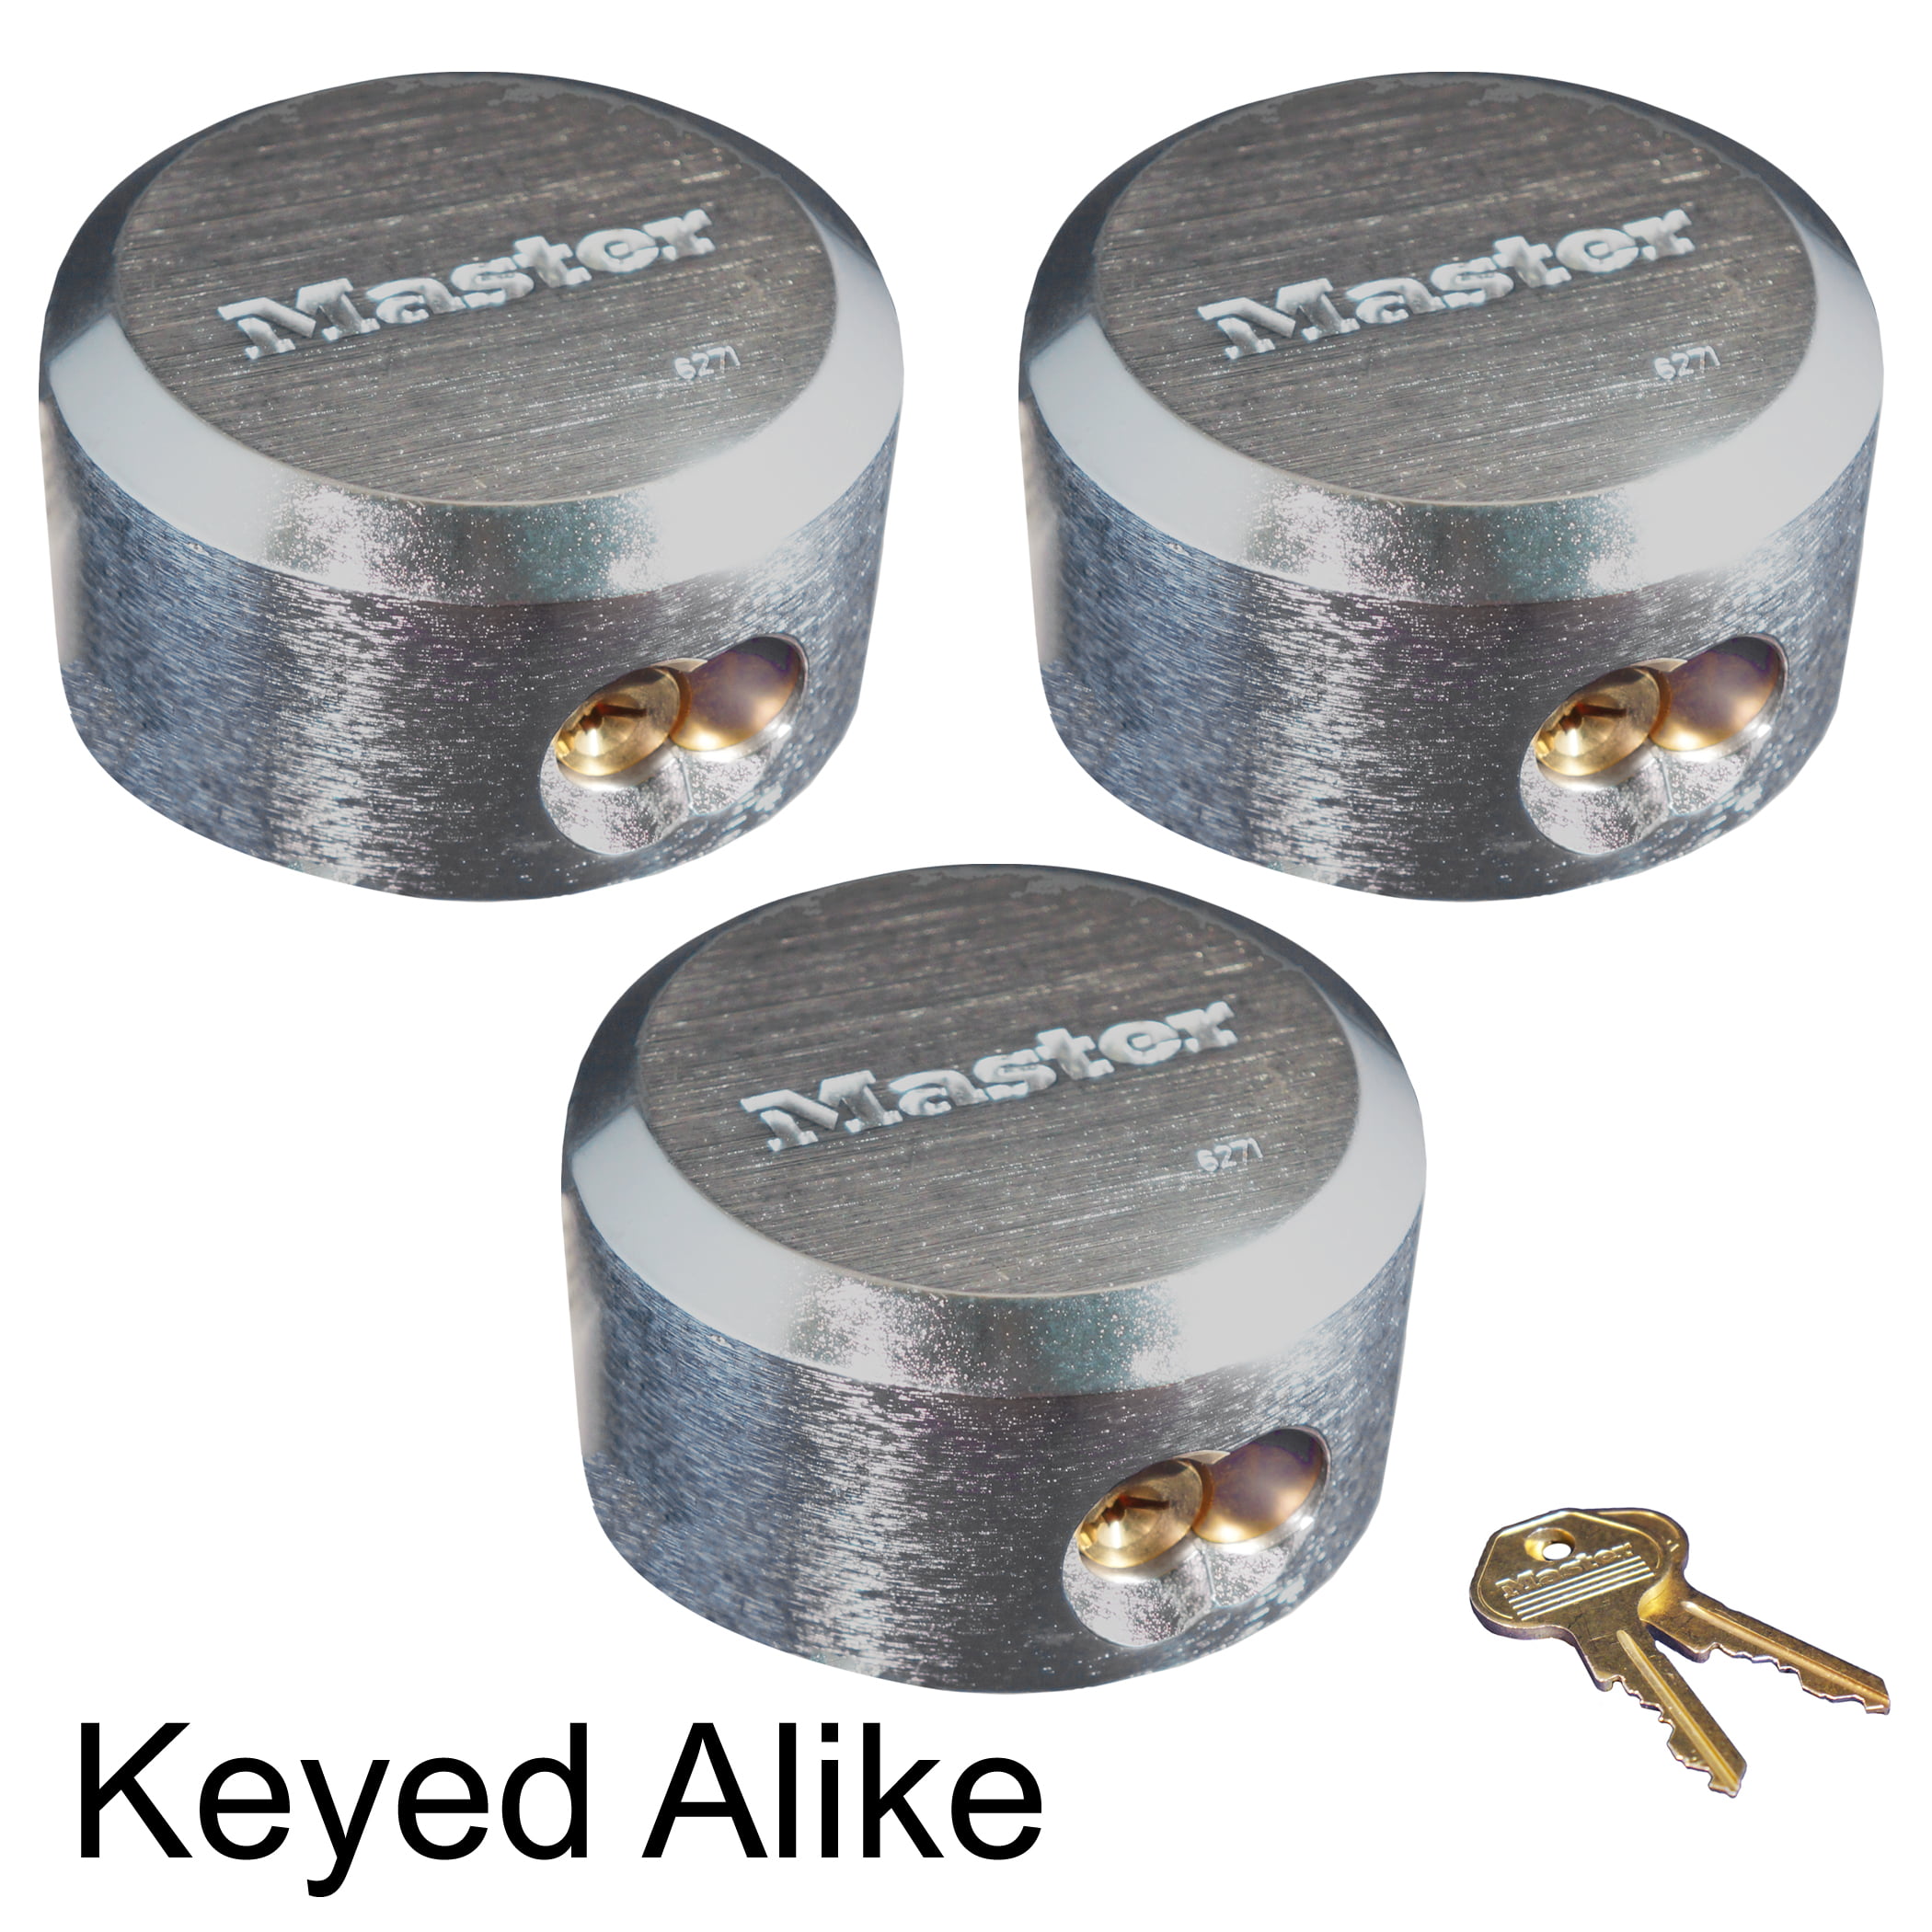 Master Lock 10 Keyed Pad Locks Keyed Alike L-23 Two Keys Per Lock NEW!!! 2